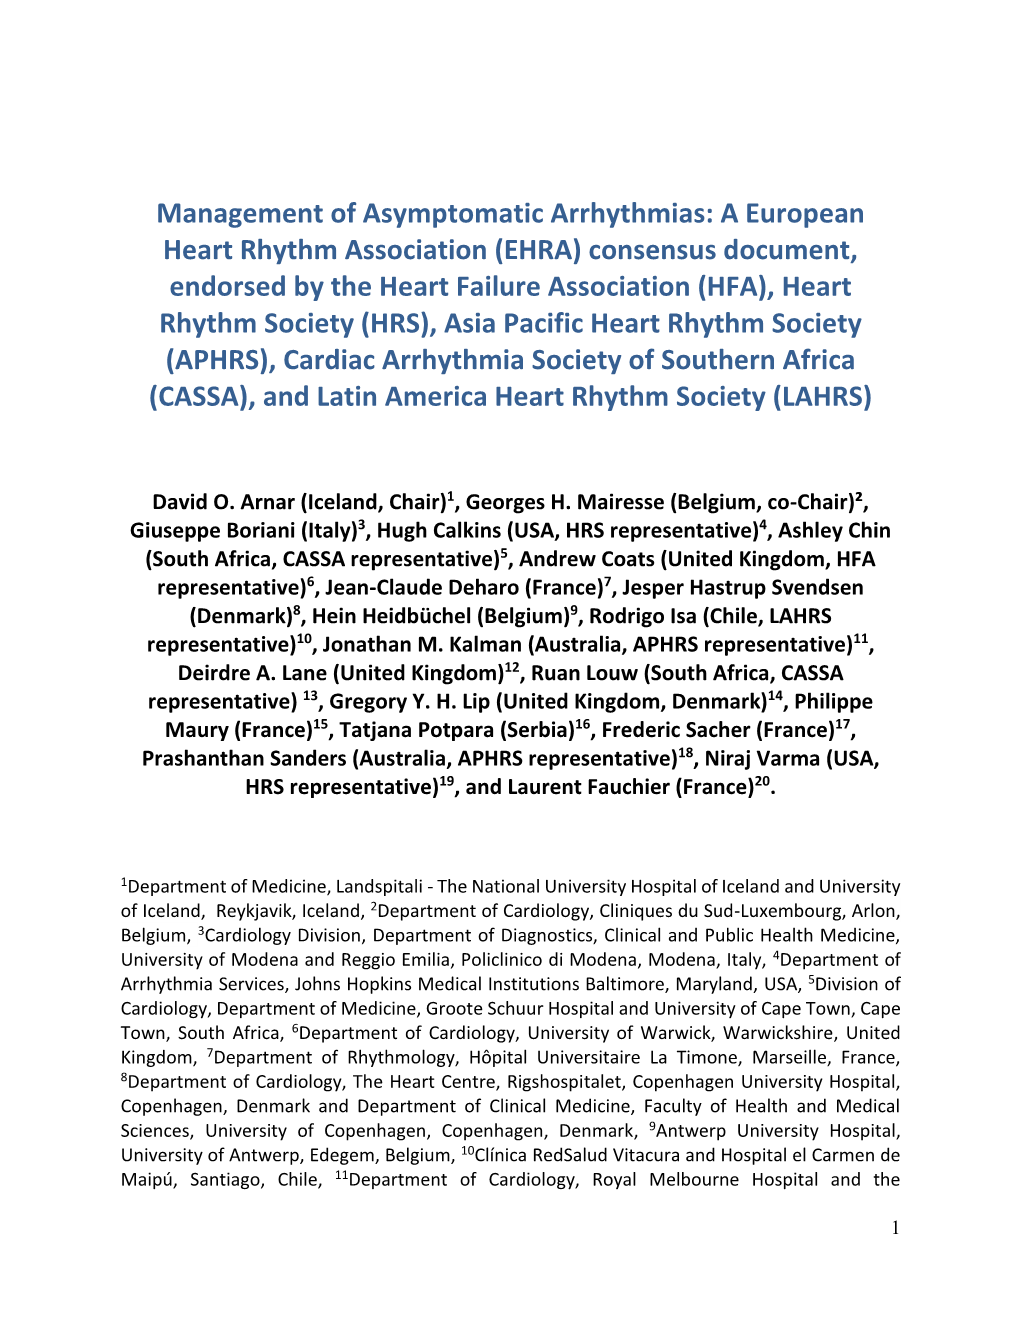 Management of Asymptomatic Arrhythmias: a European Heart